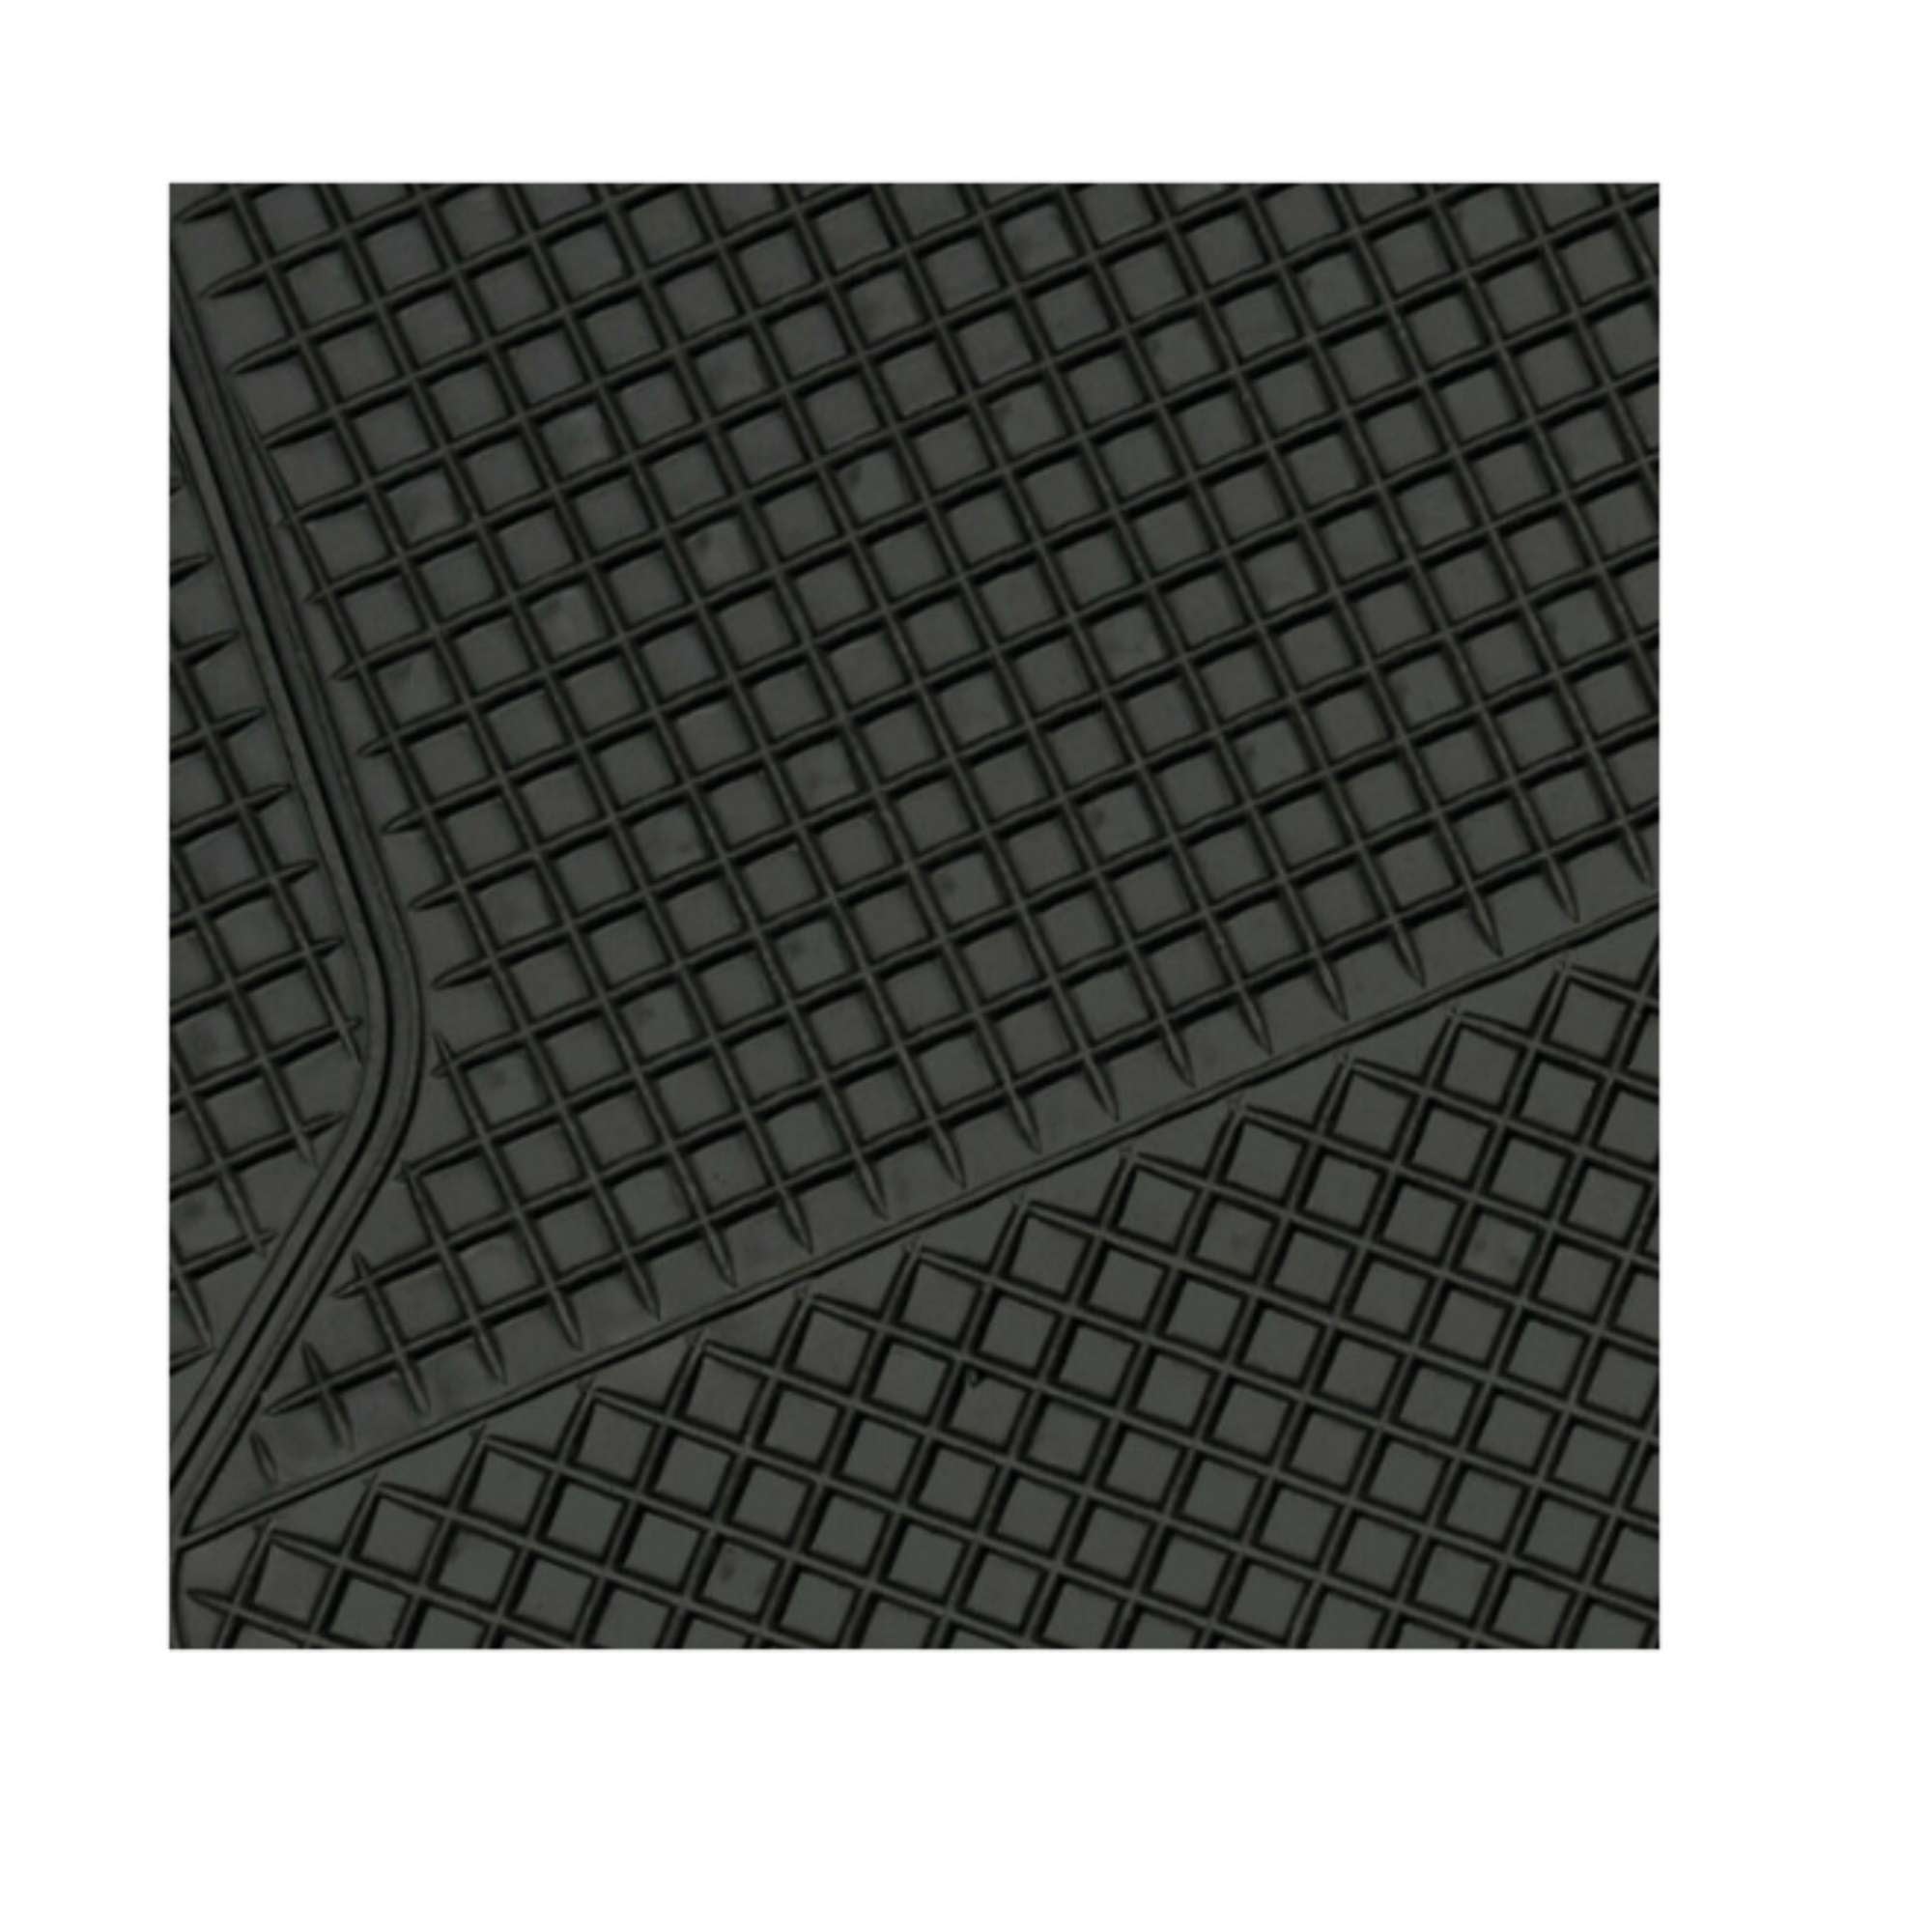 California Gran Pree, serie tappeti universali in pvc 4 pezzi 45x65 + 45x32 cm